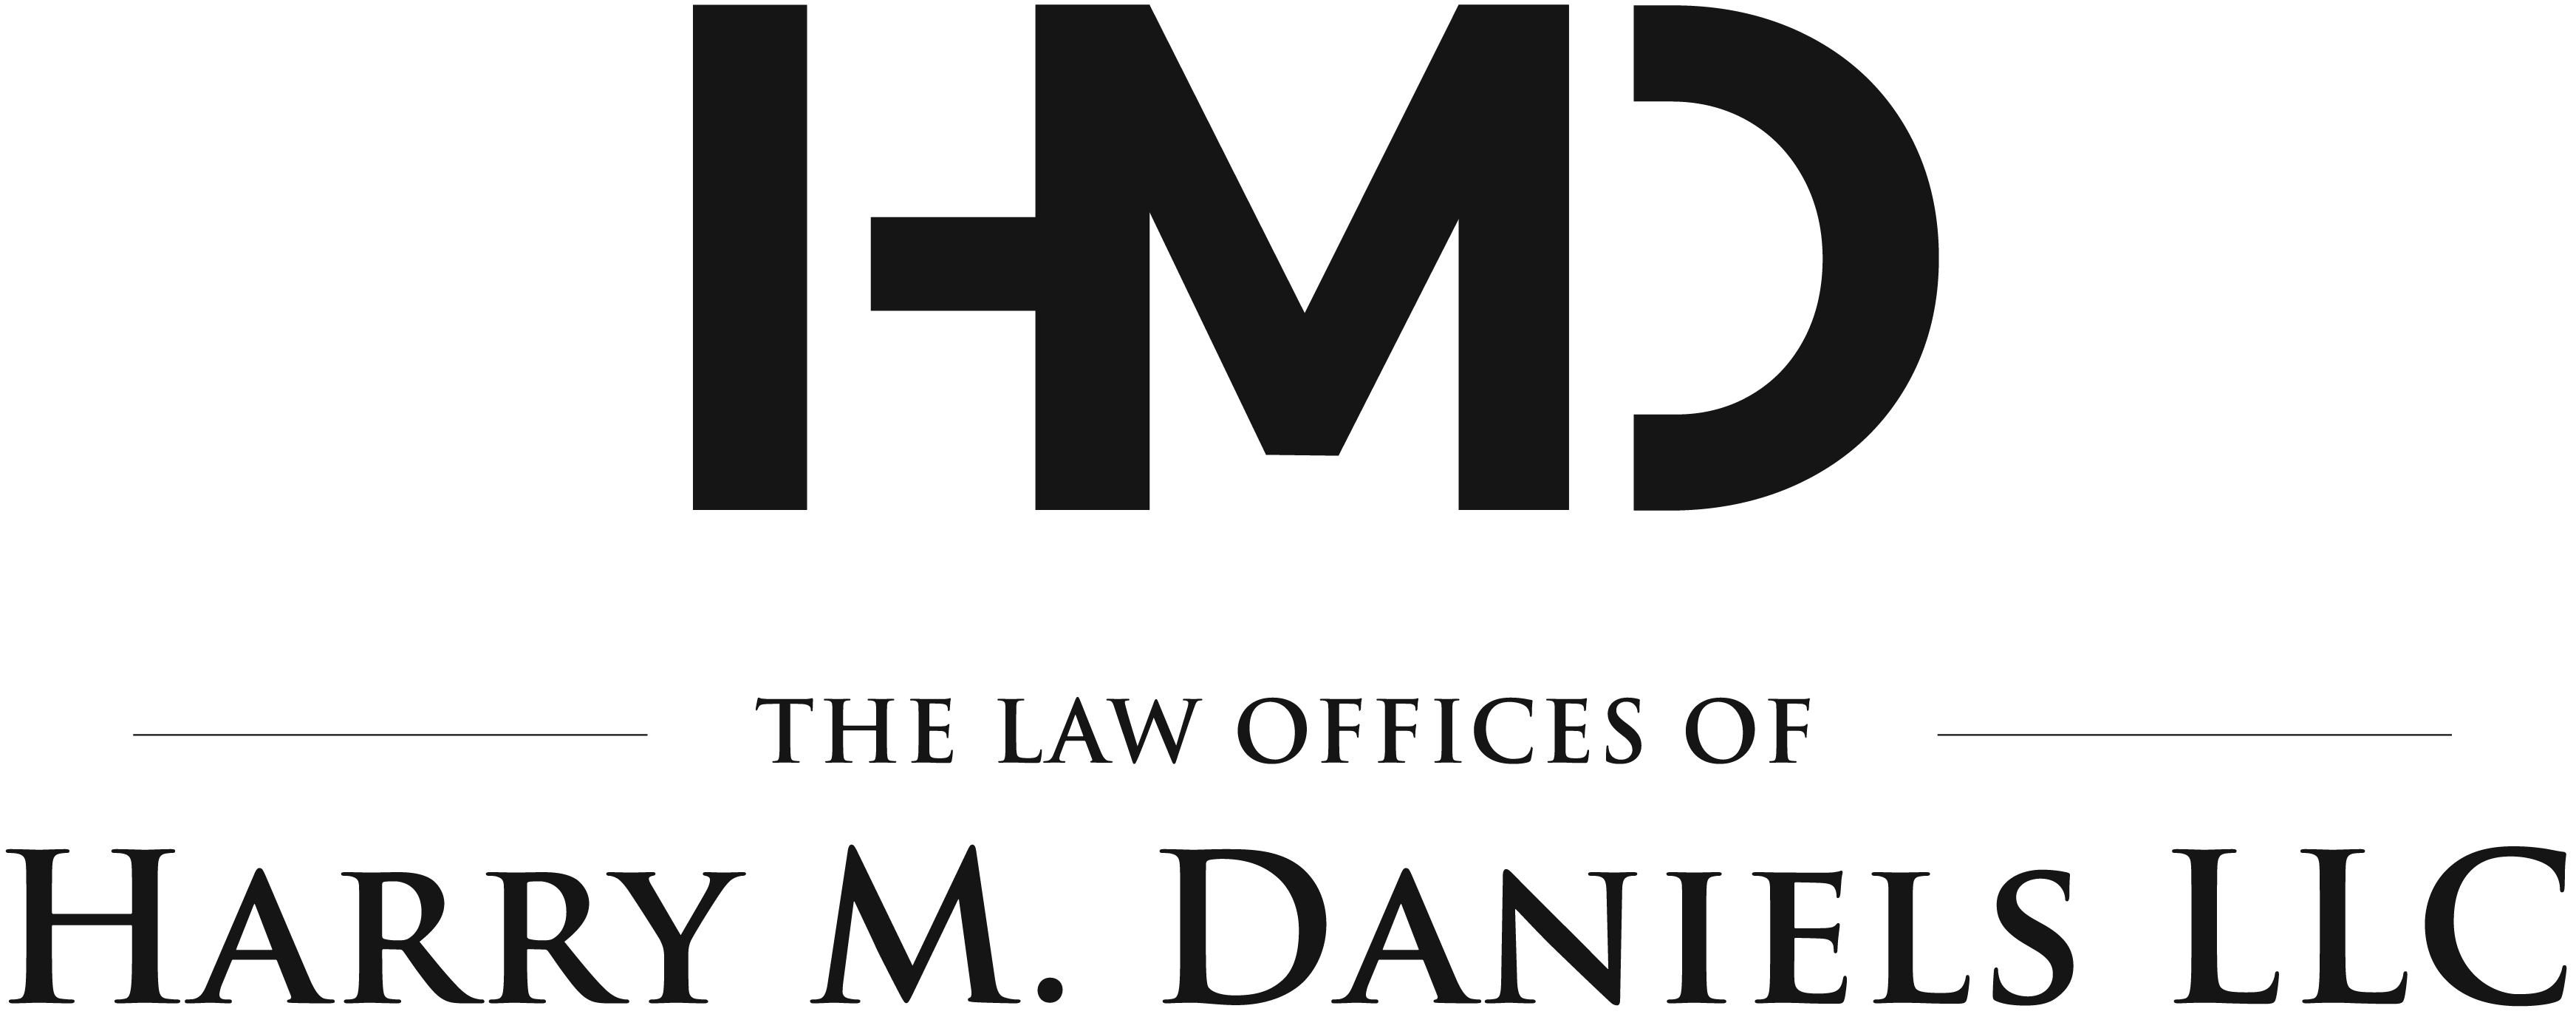 The Law Office of Harry M. Daniels